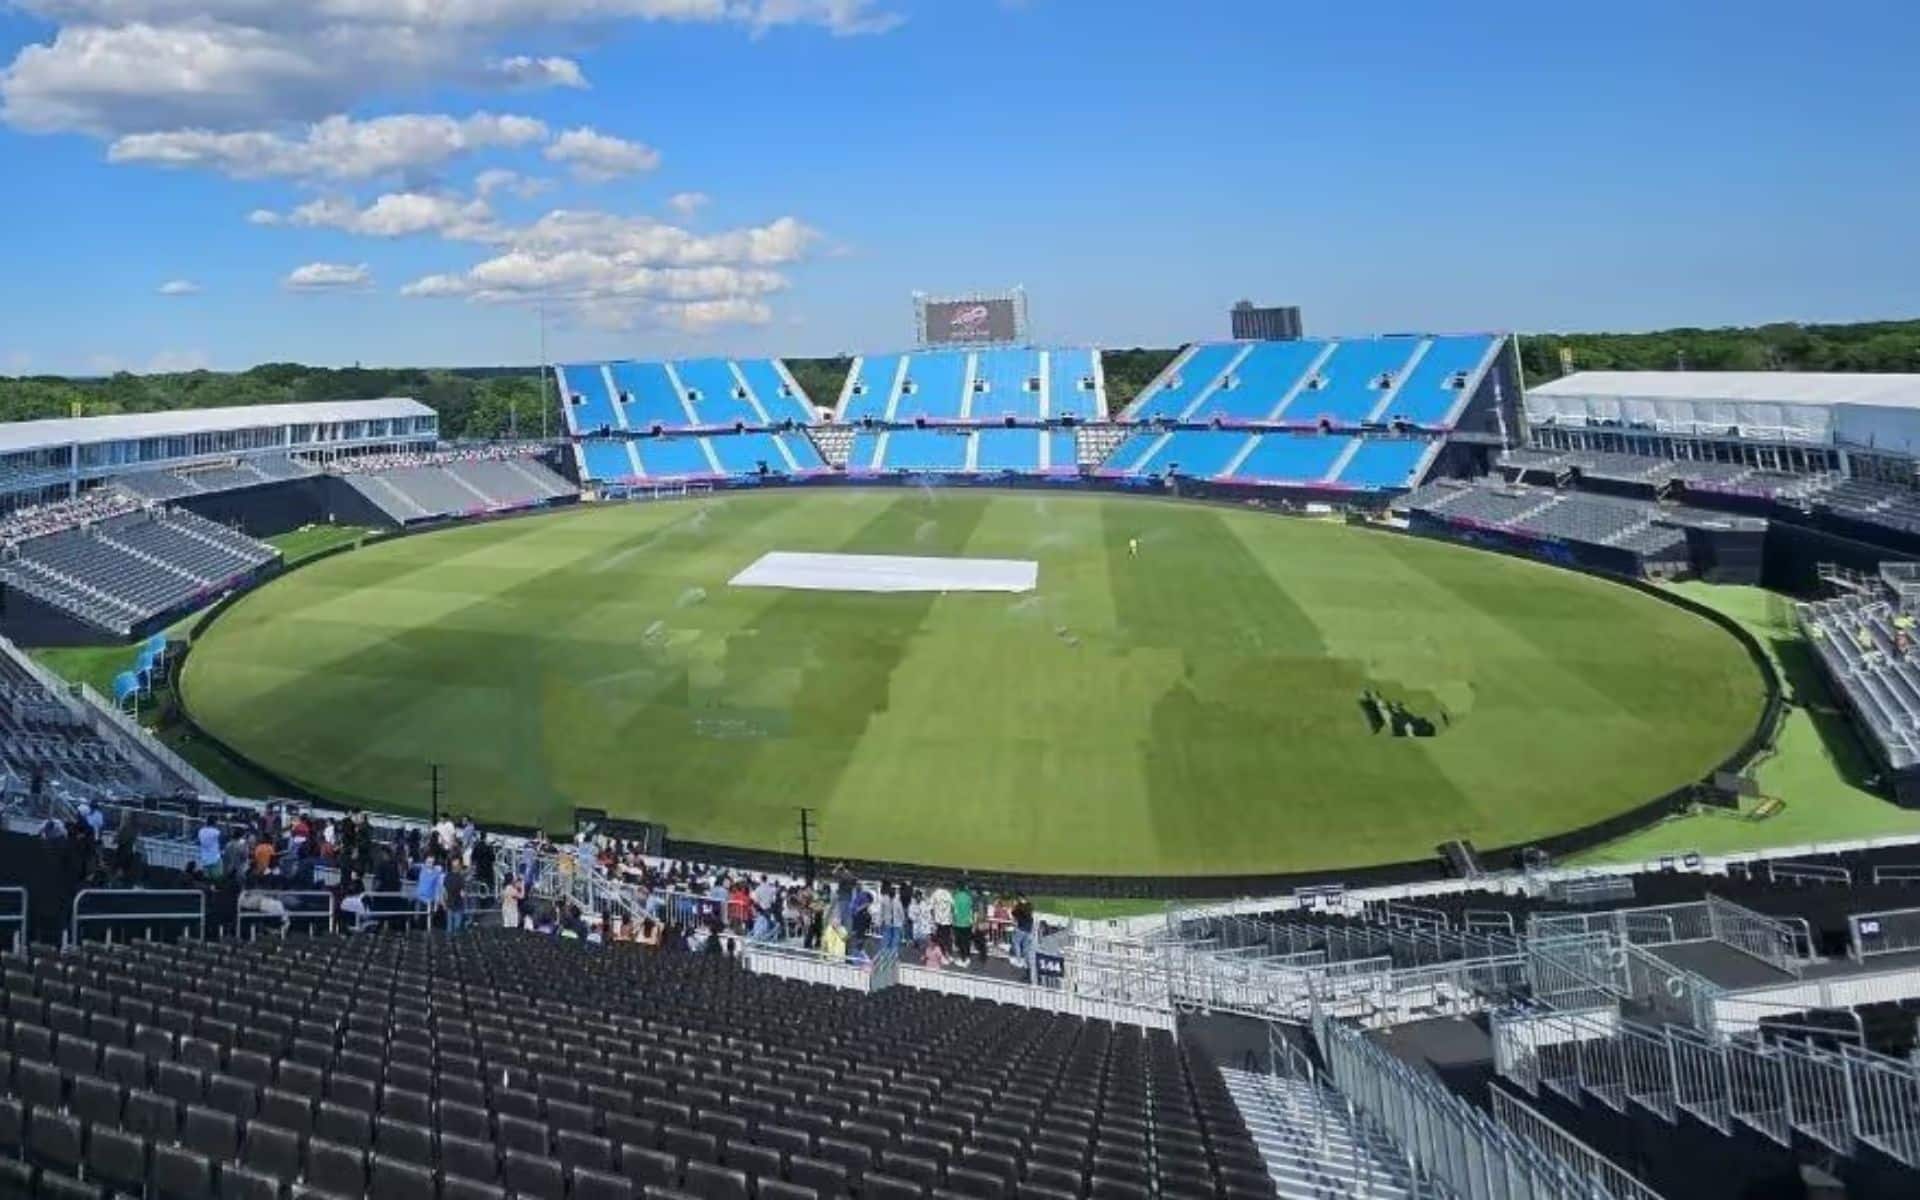 A bird-eye view of Nassau County International Cricket Stadium (x.com)